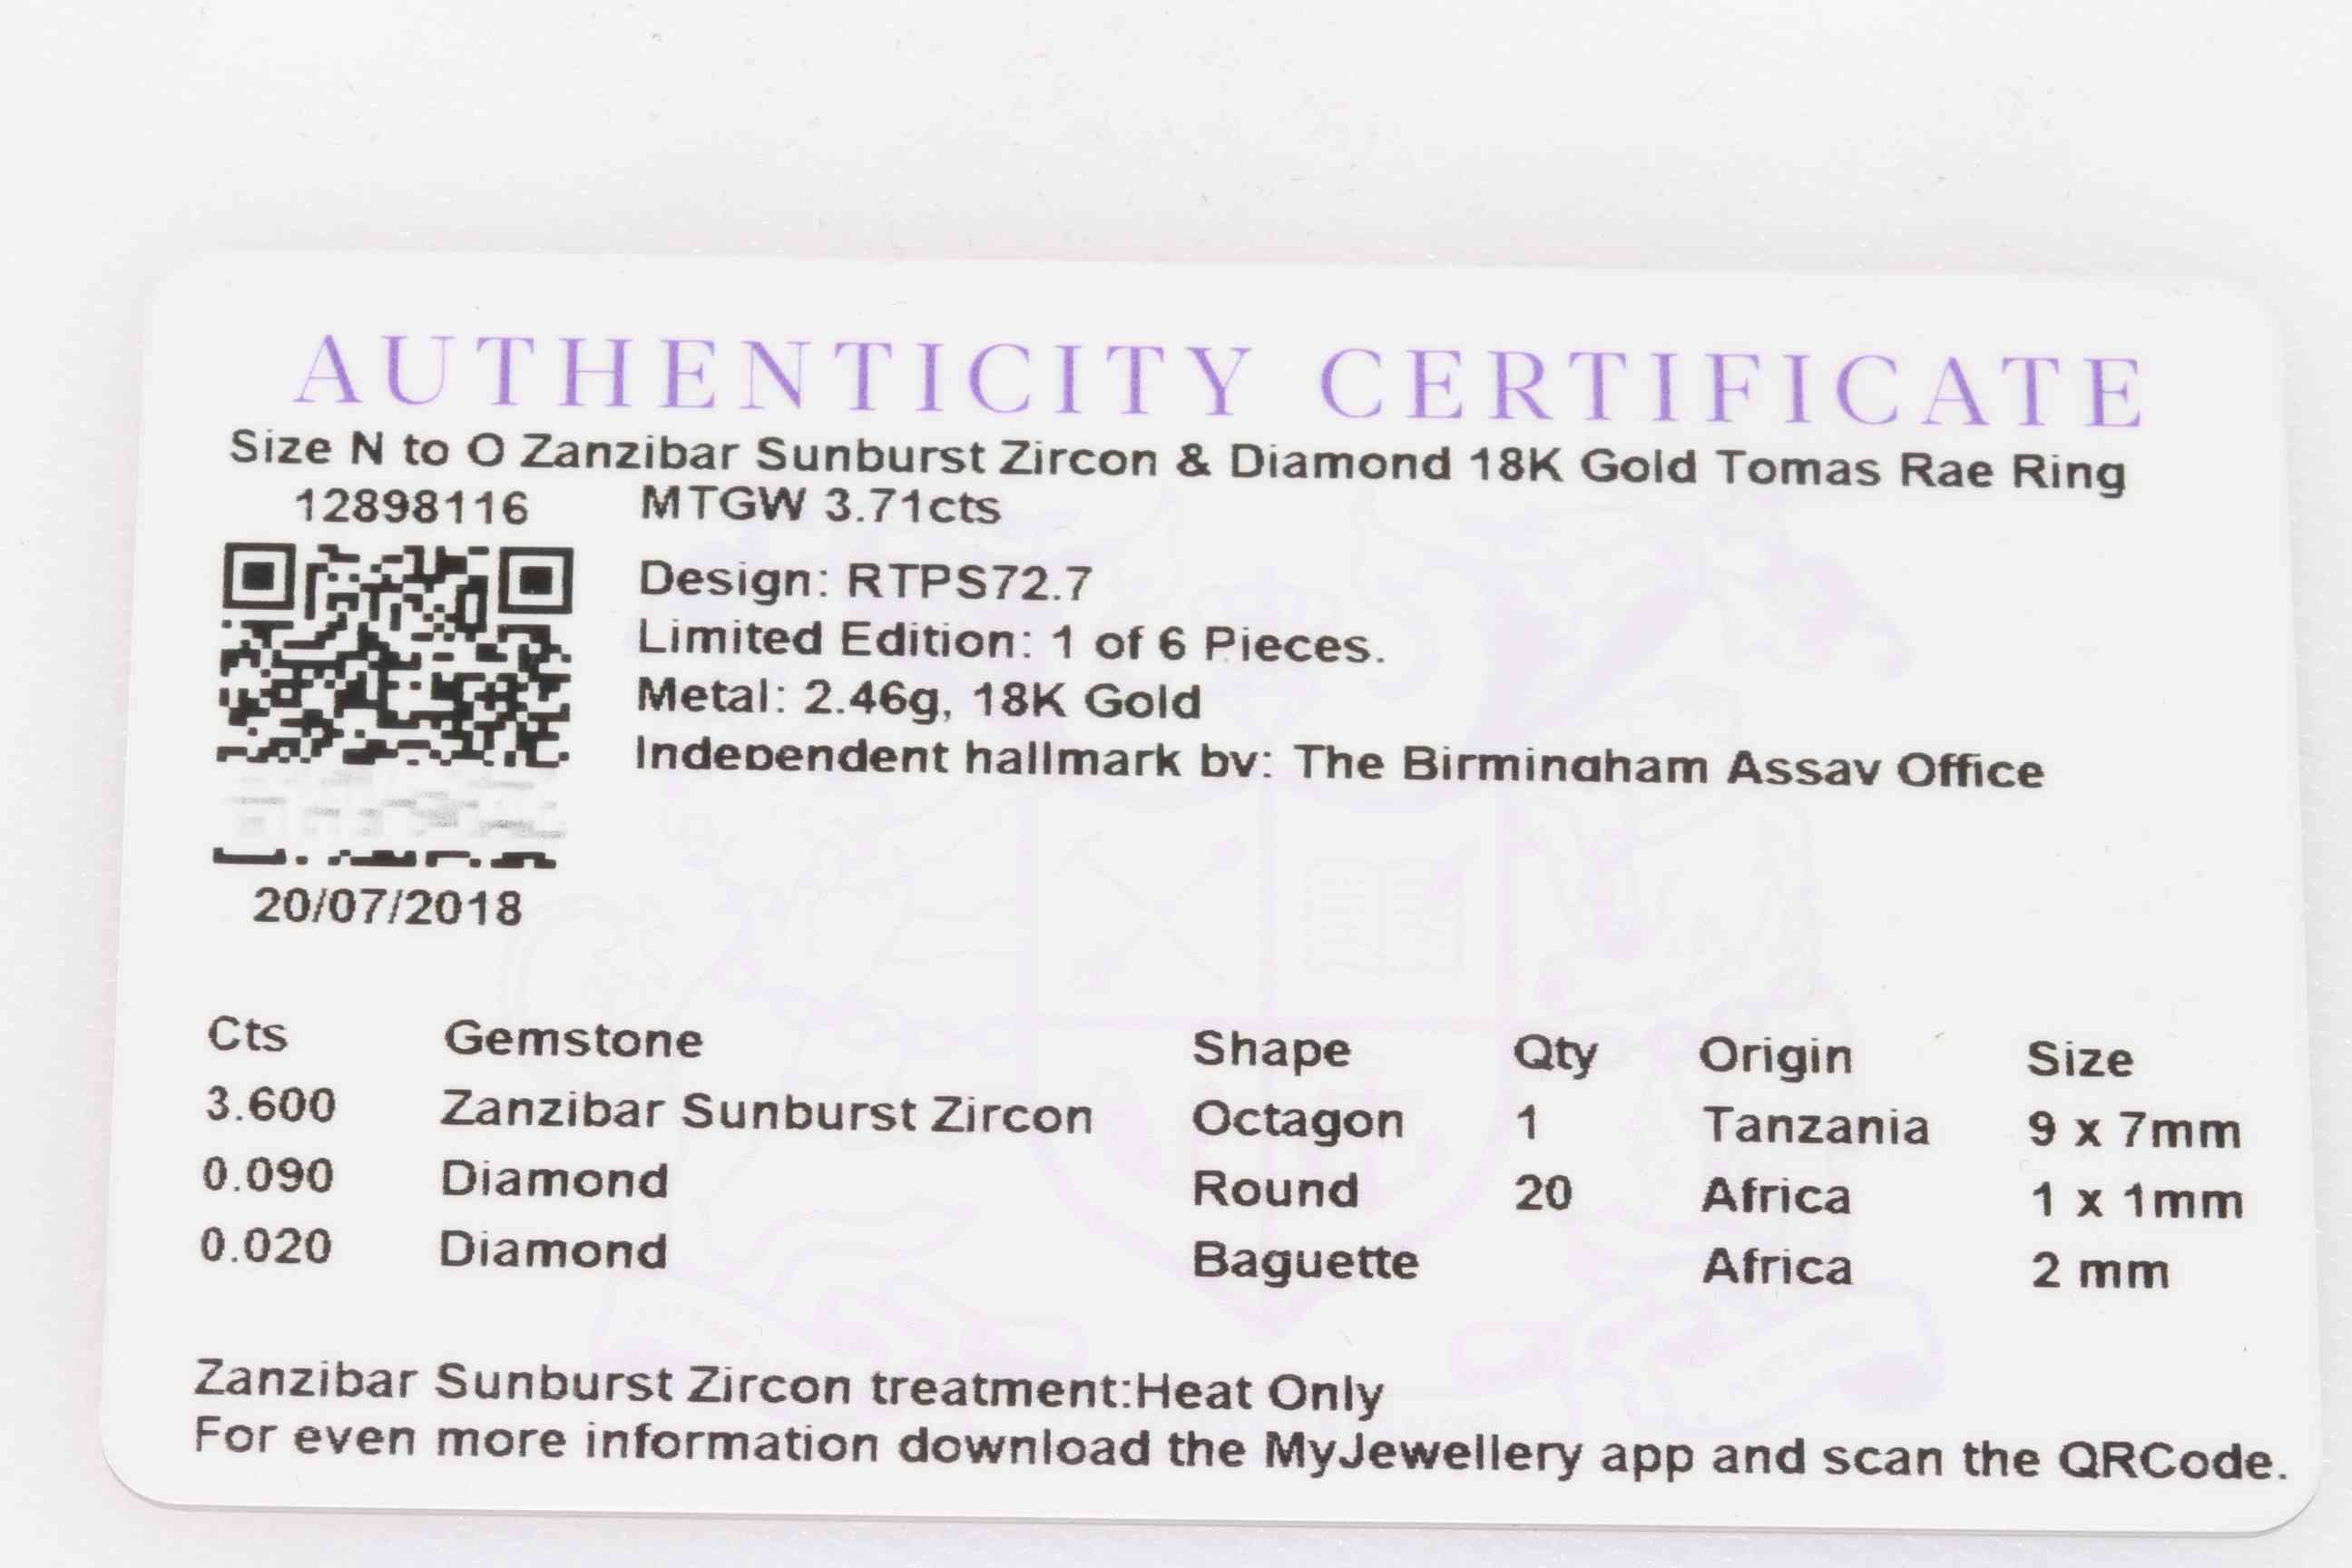 Zanzibar Sunburst Zircon and diamond ring set in 18 carat yellow gold, size N/O, with certificate. - Image 2 of 2